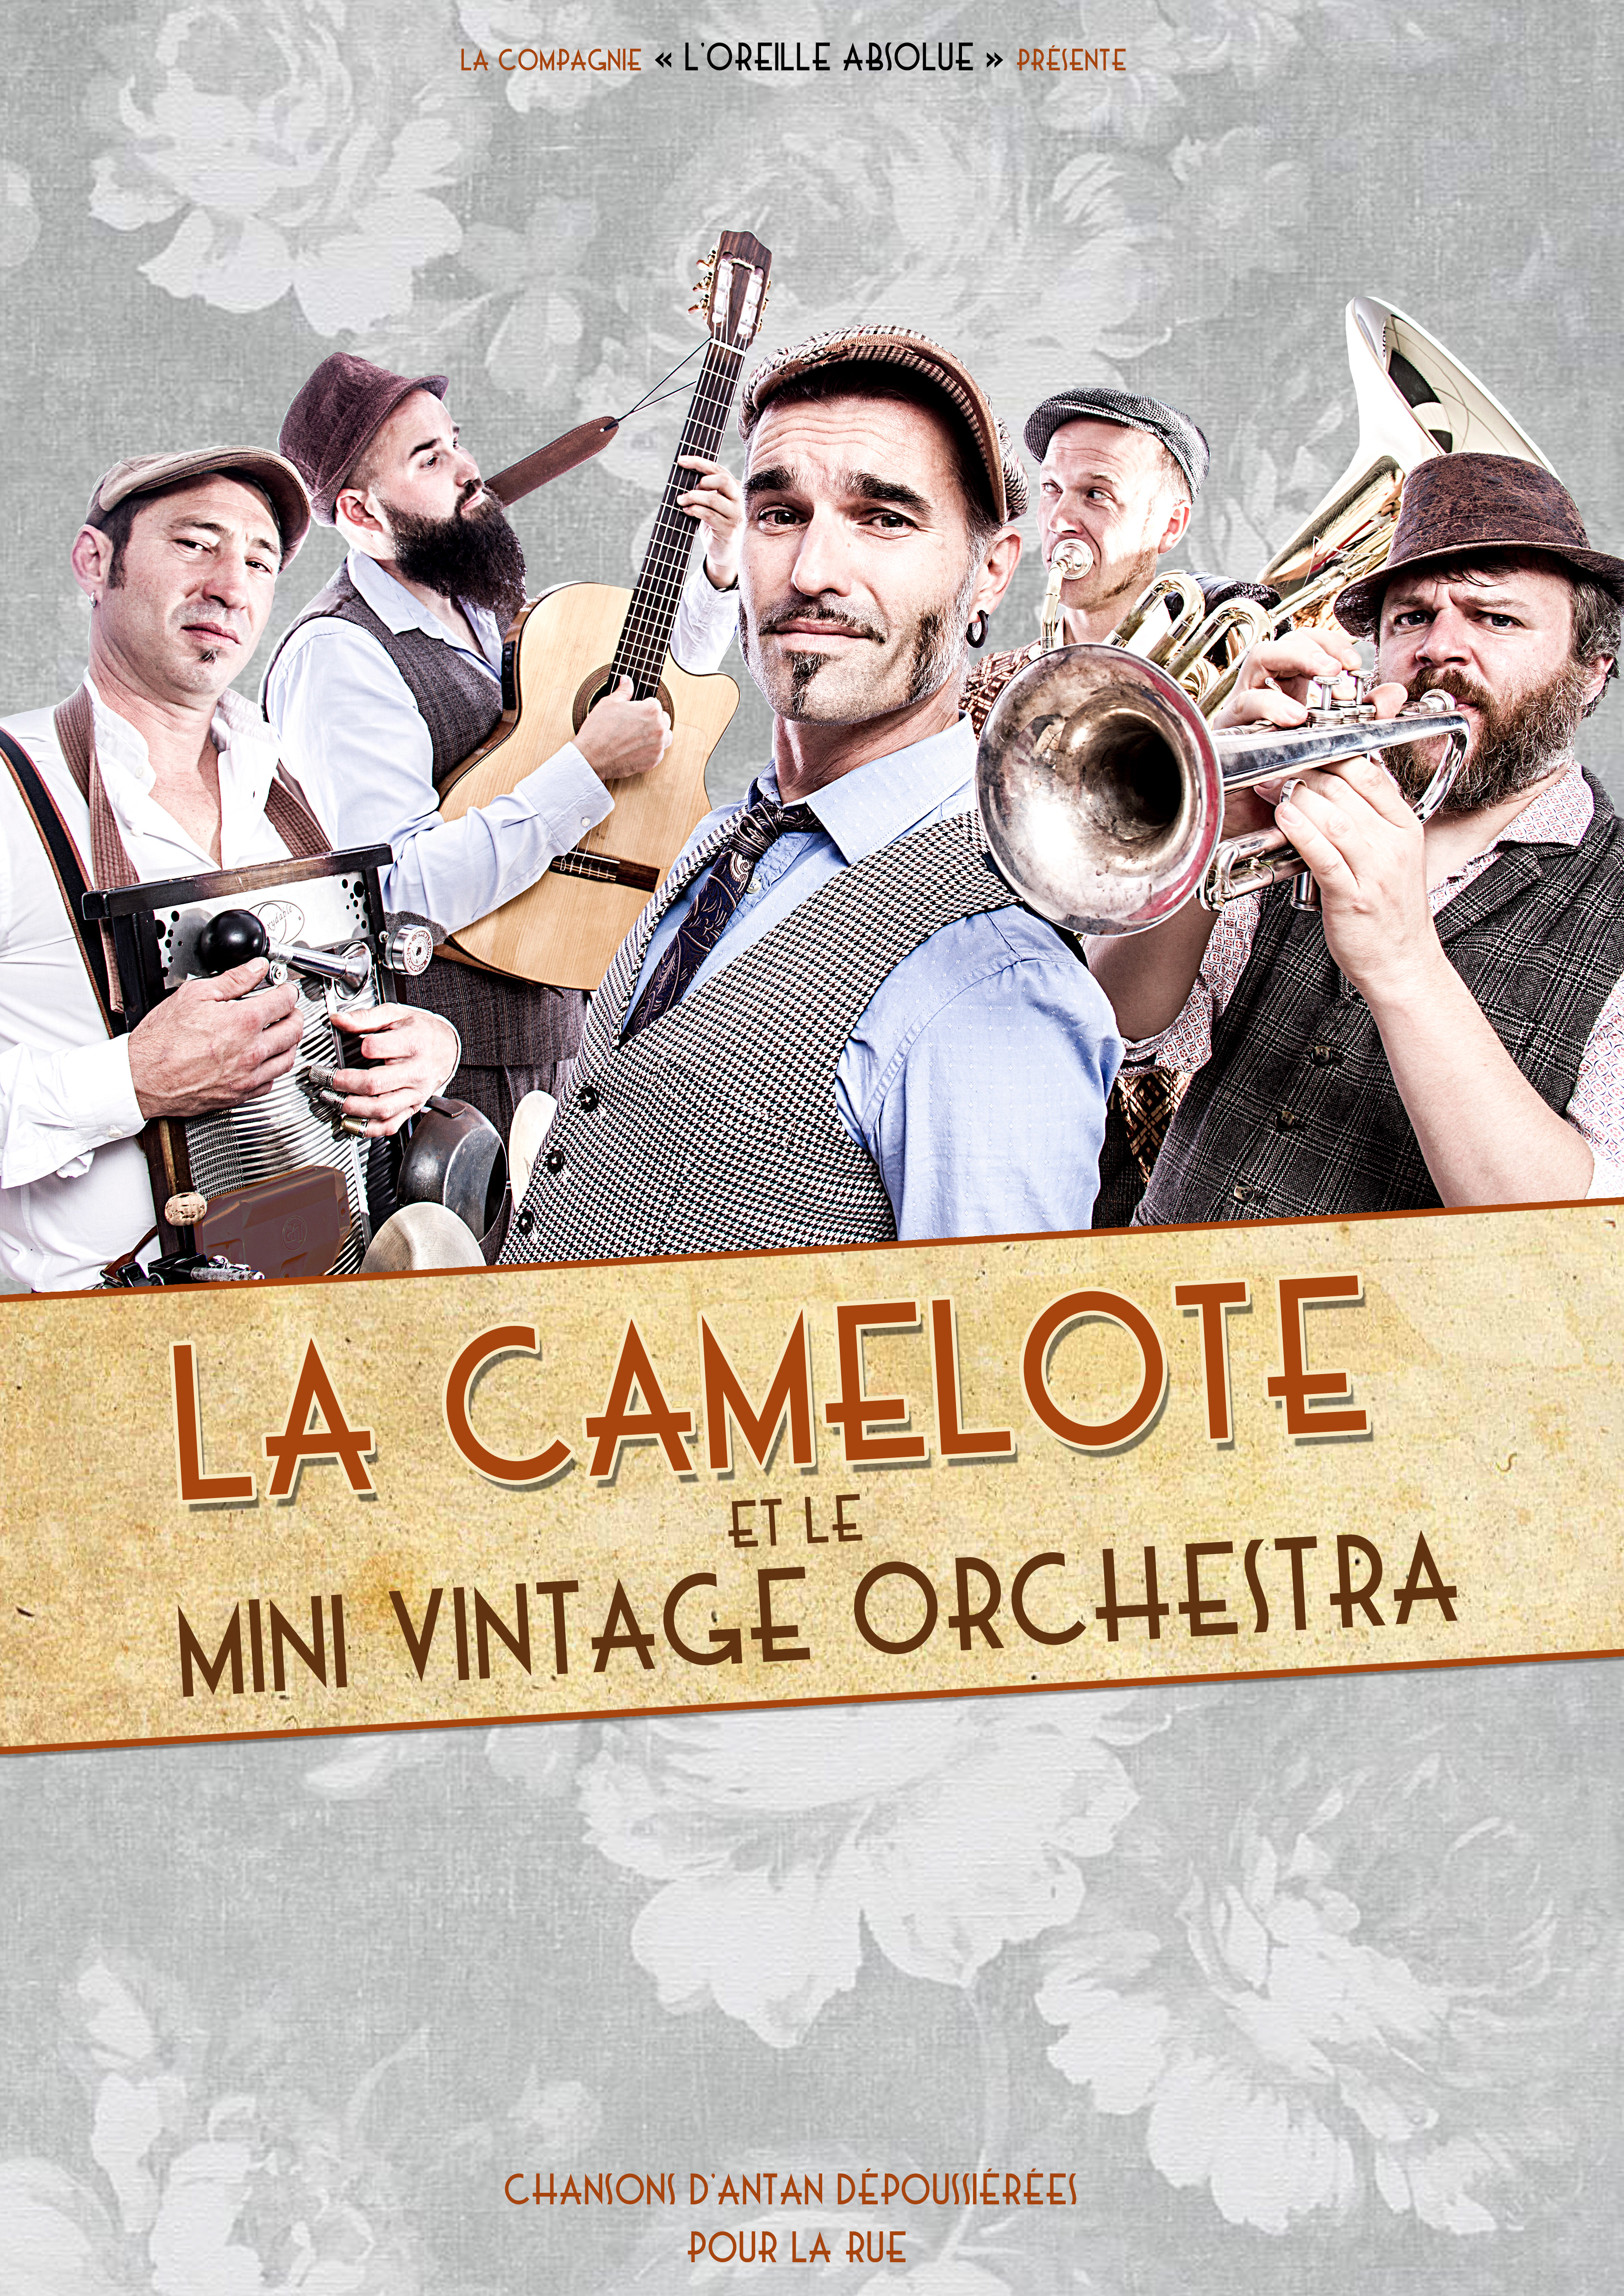 CAMELOTE et ini Vintage Orchestra 2